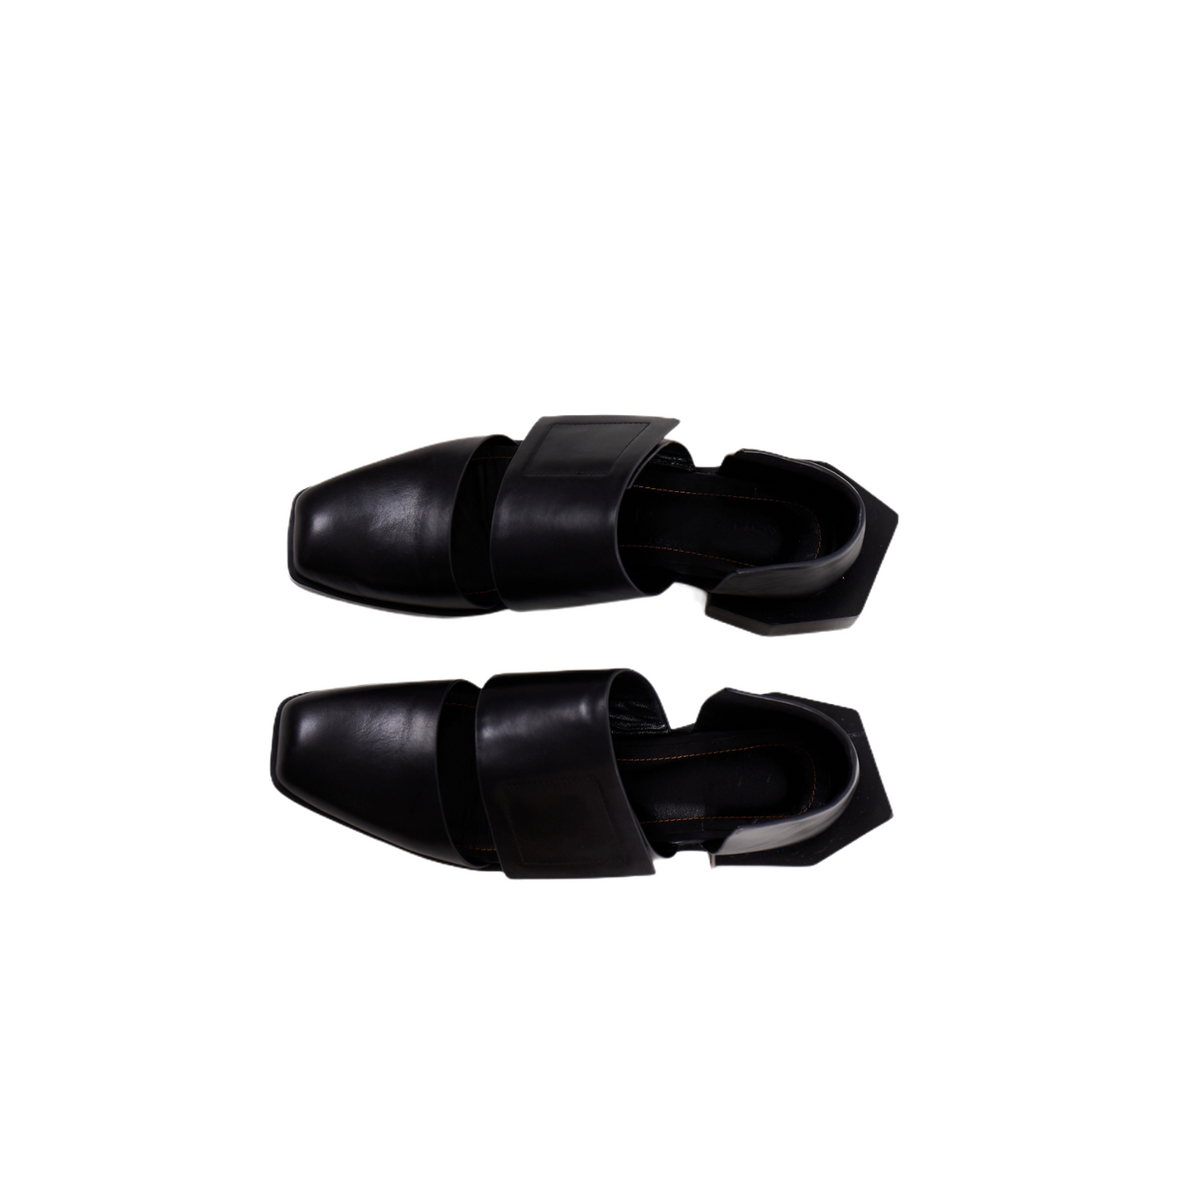 AMAP Op. 1 Leather Geometric Heel Sandals